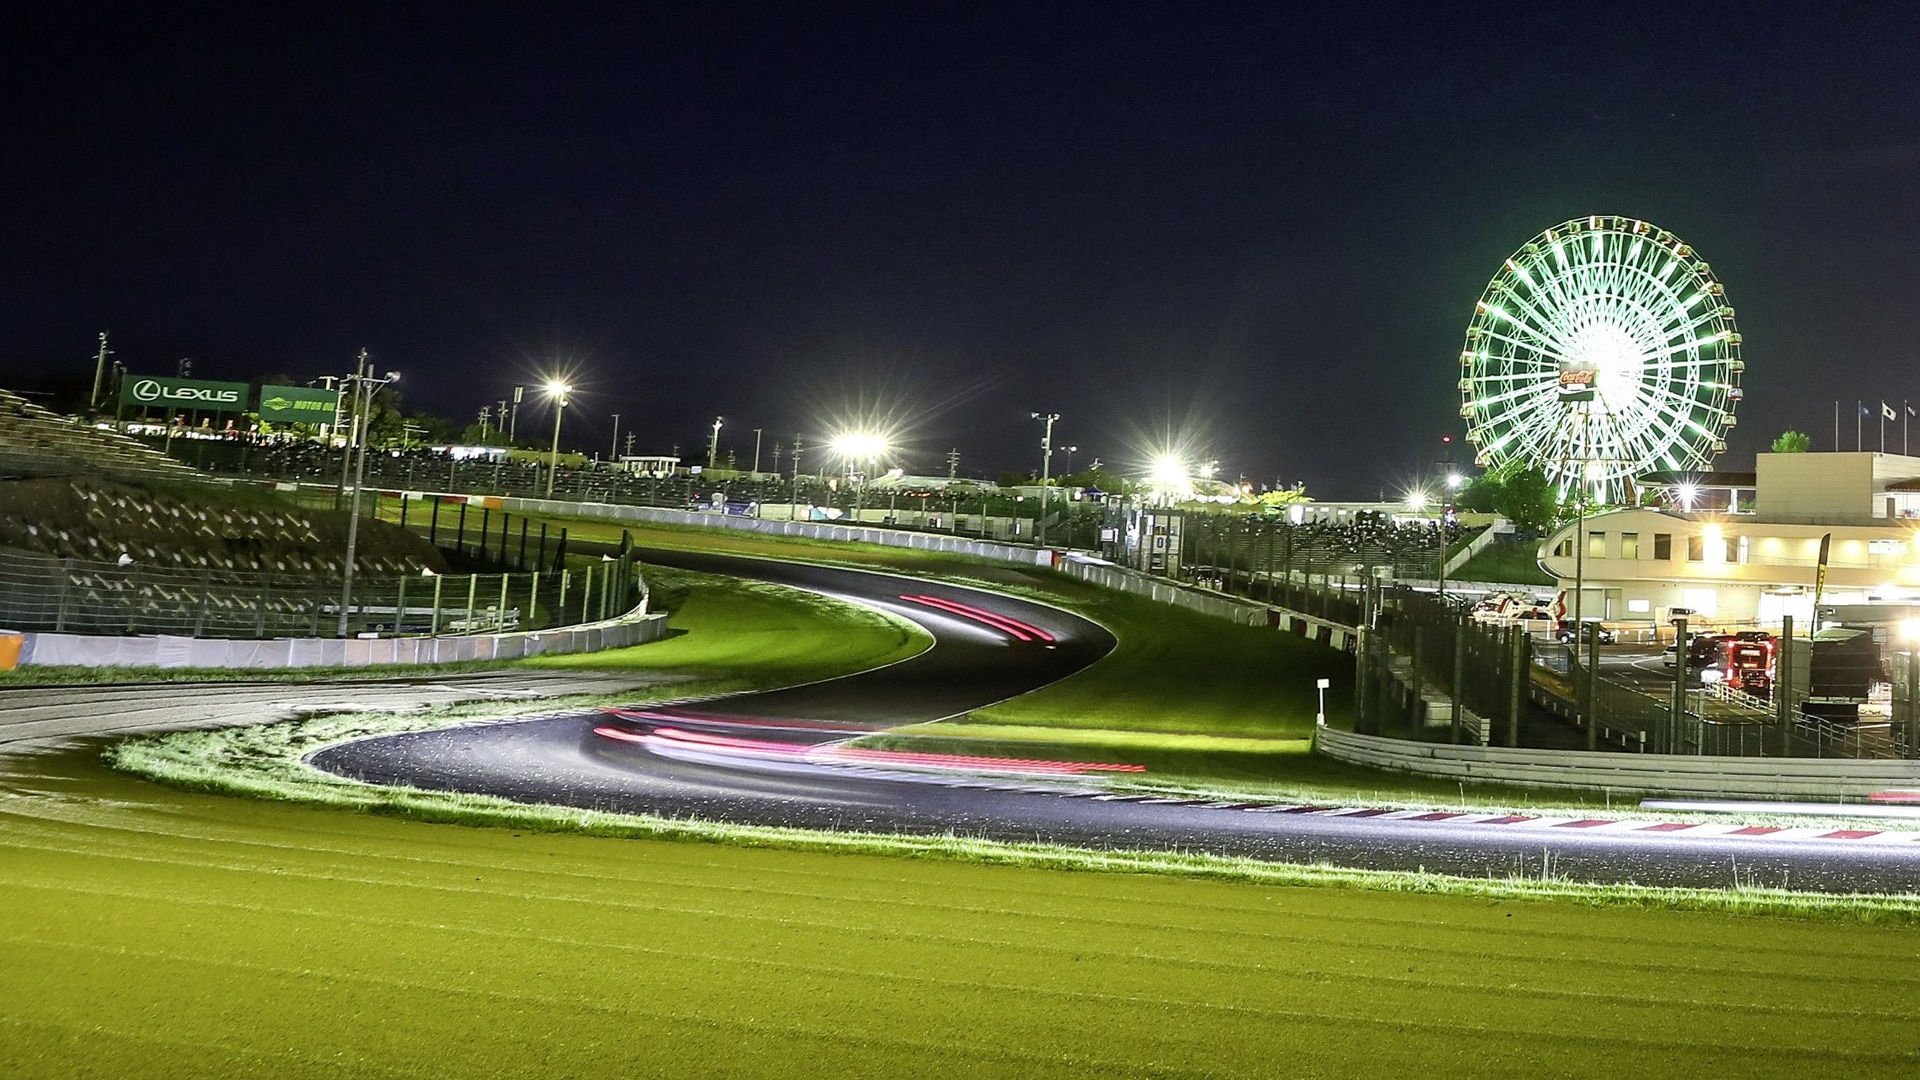 Suzuka Circuit, home of the Formula One Japanese Grand Prix